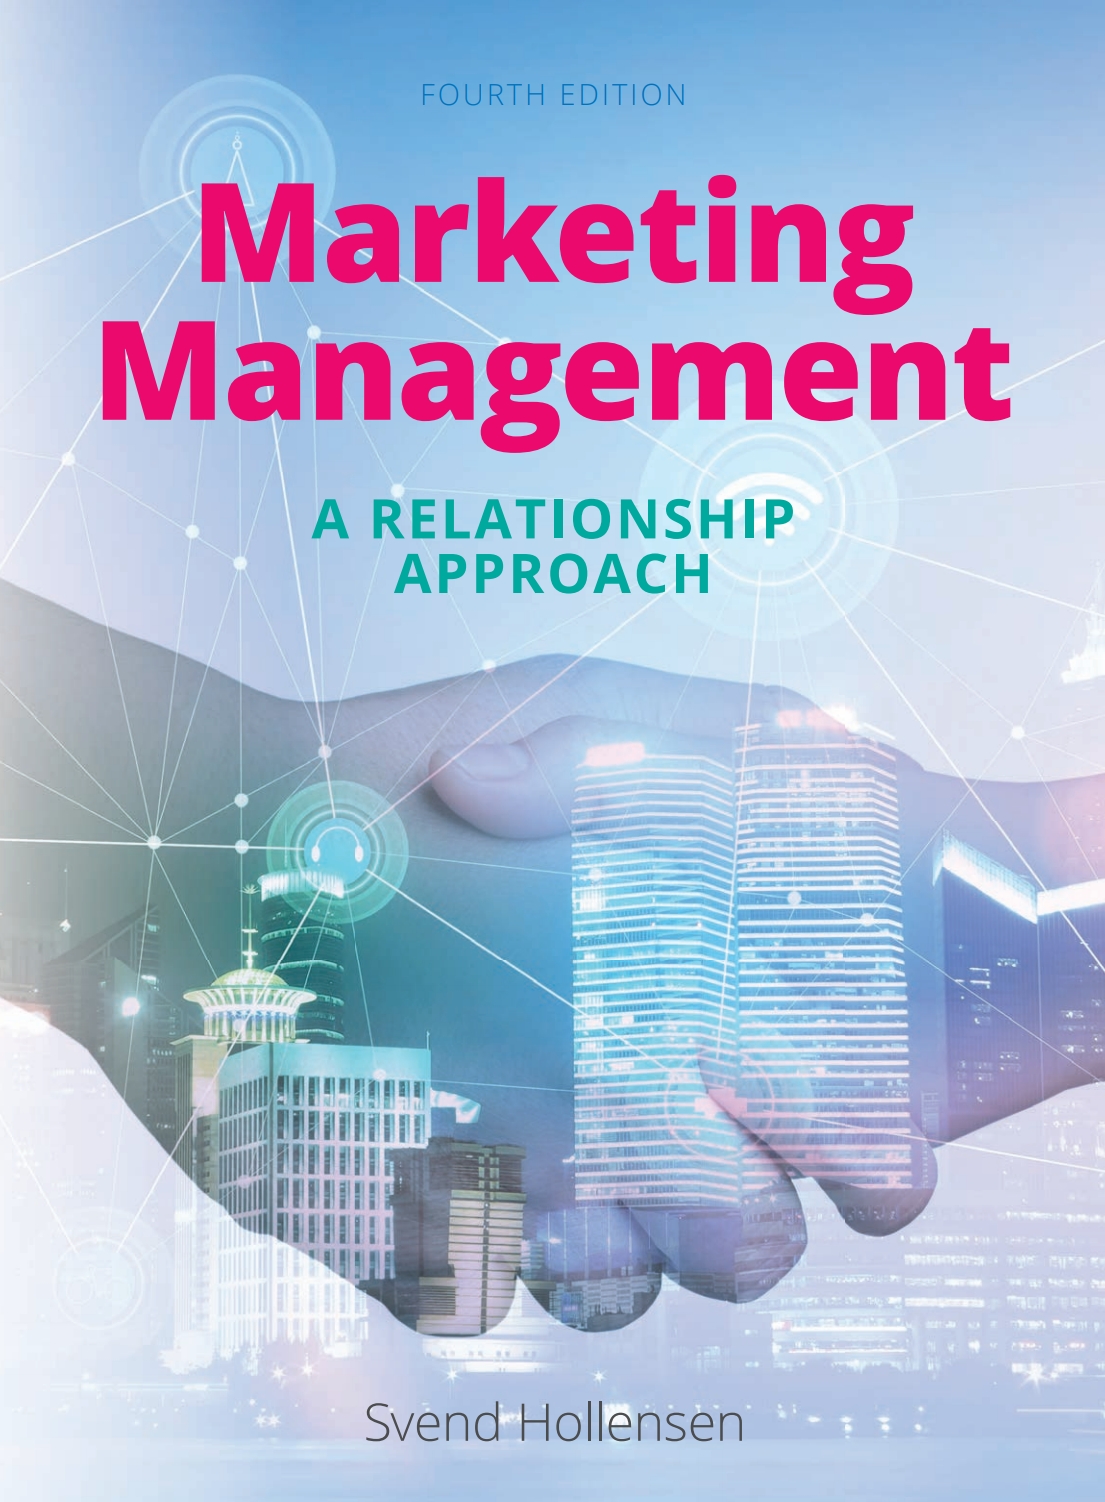 Marketing management pdf download